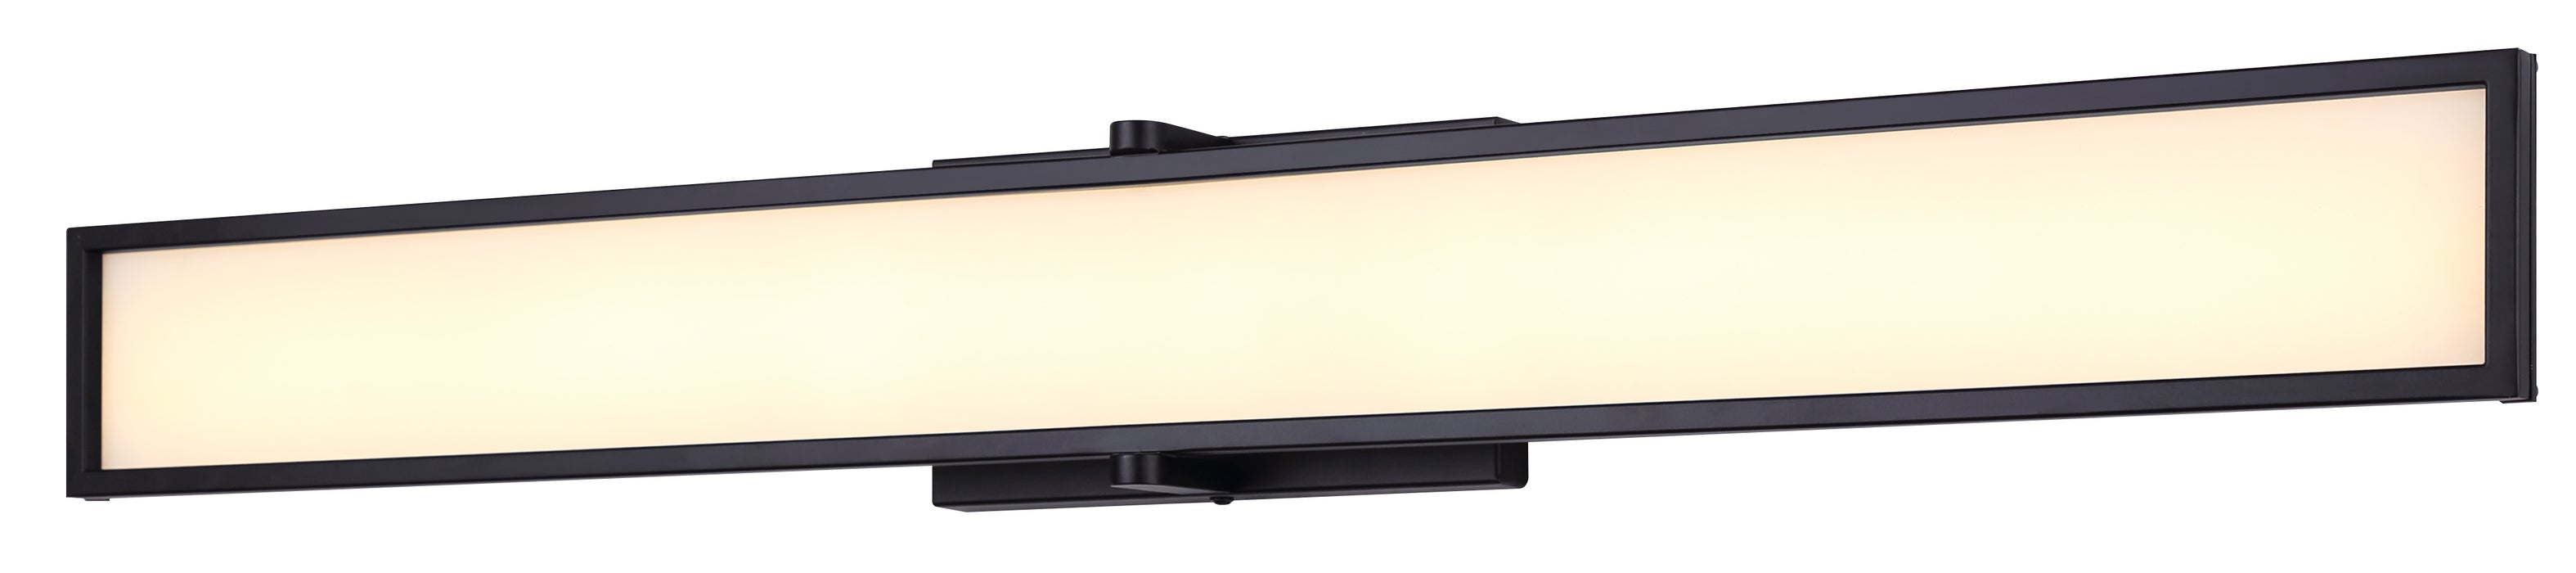 VANITY BAR Canarm LVL229A36BK PAX 36 inch LED Vanity Light in Black Canarm